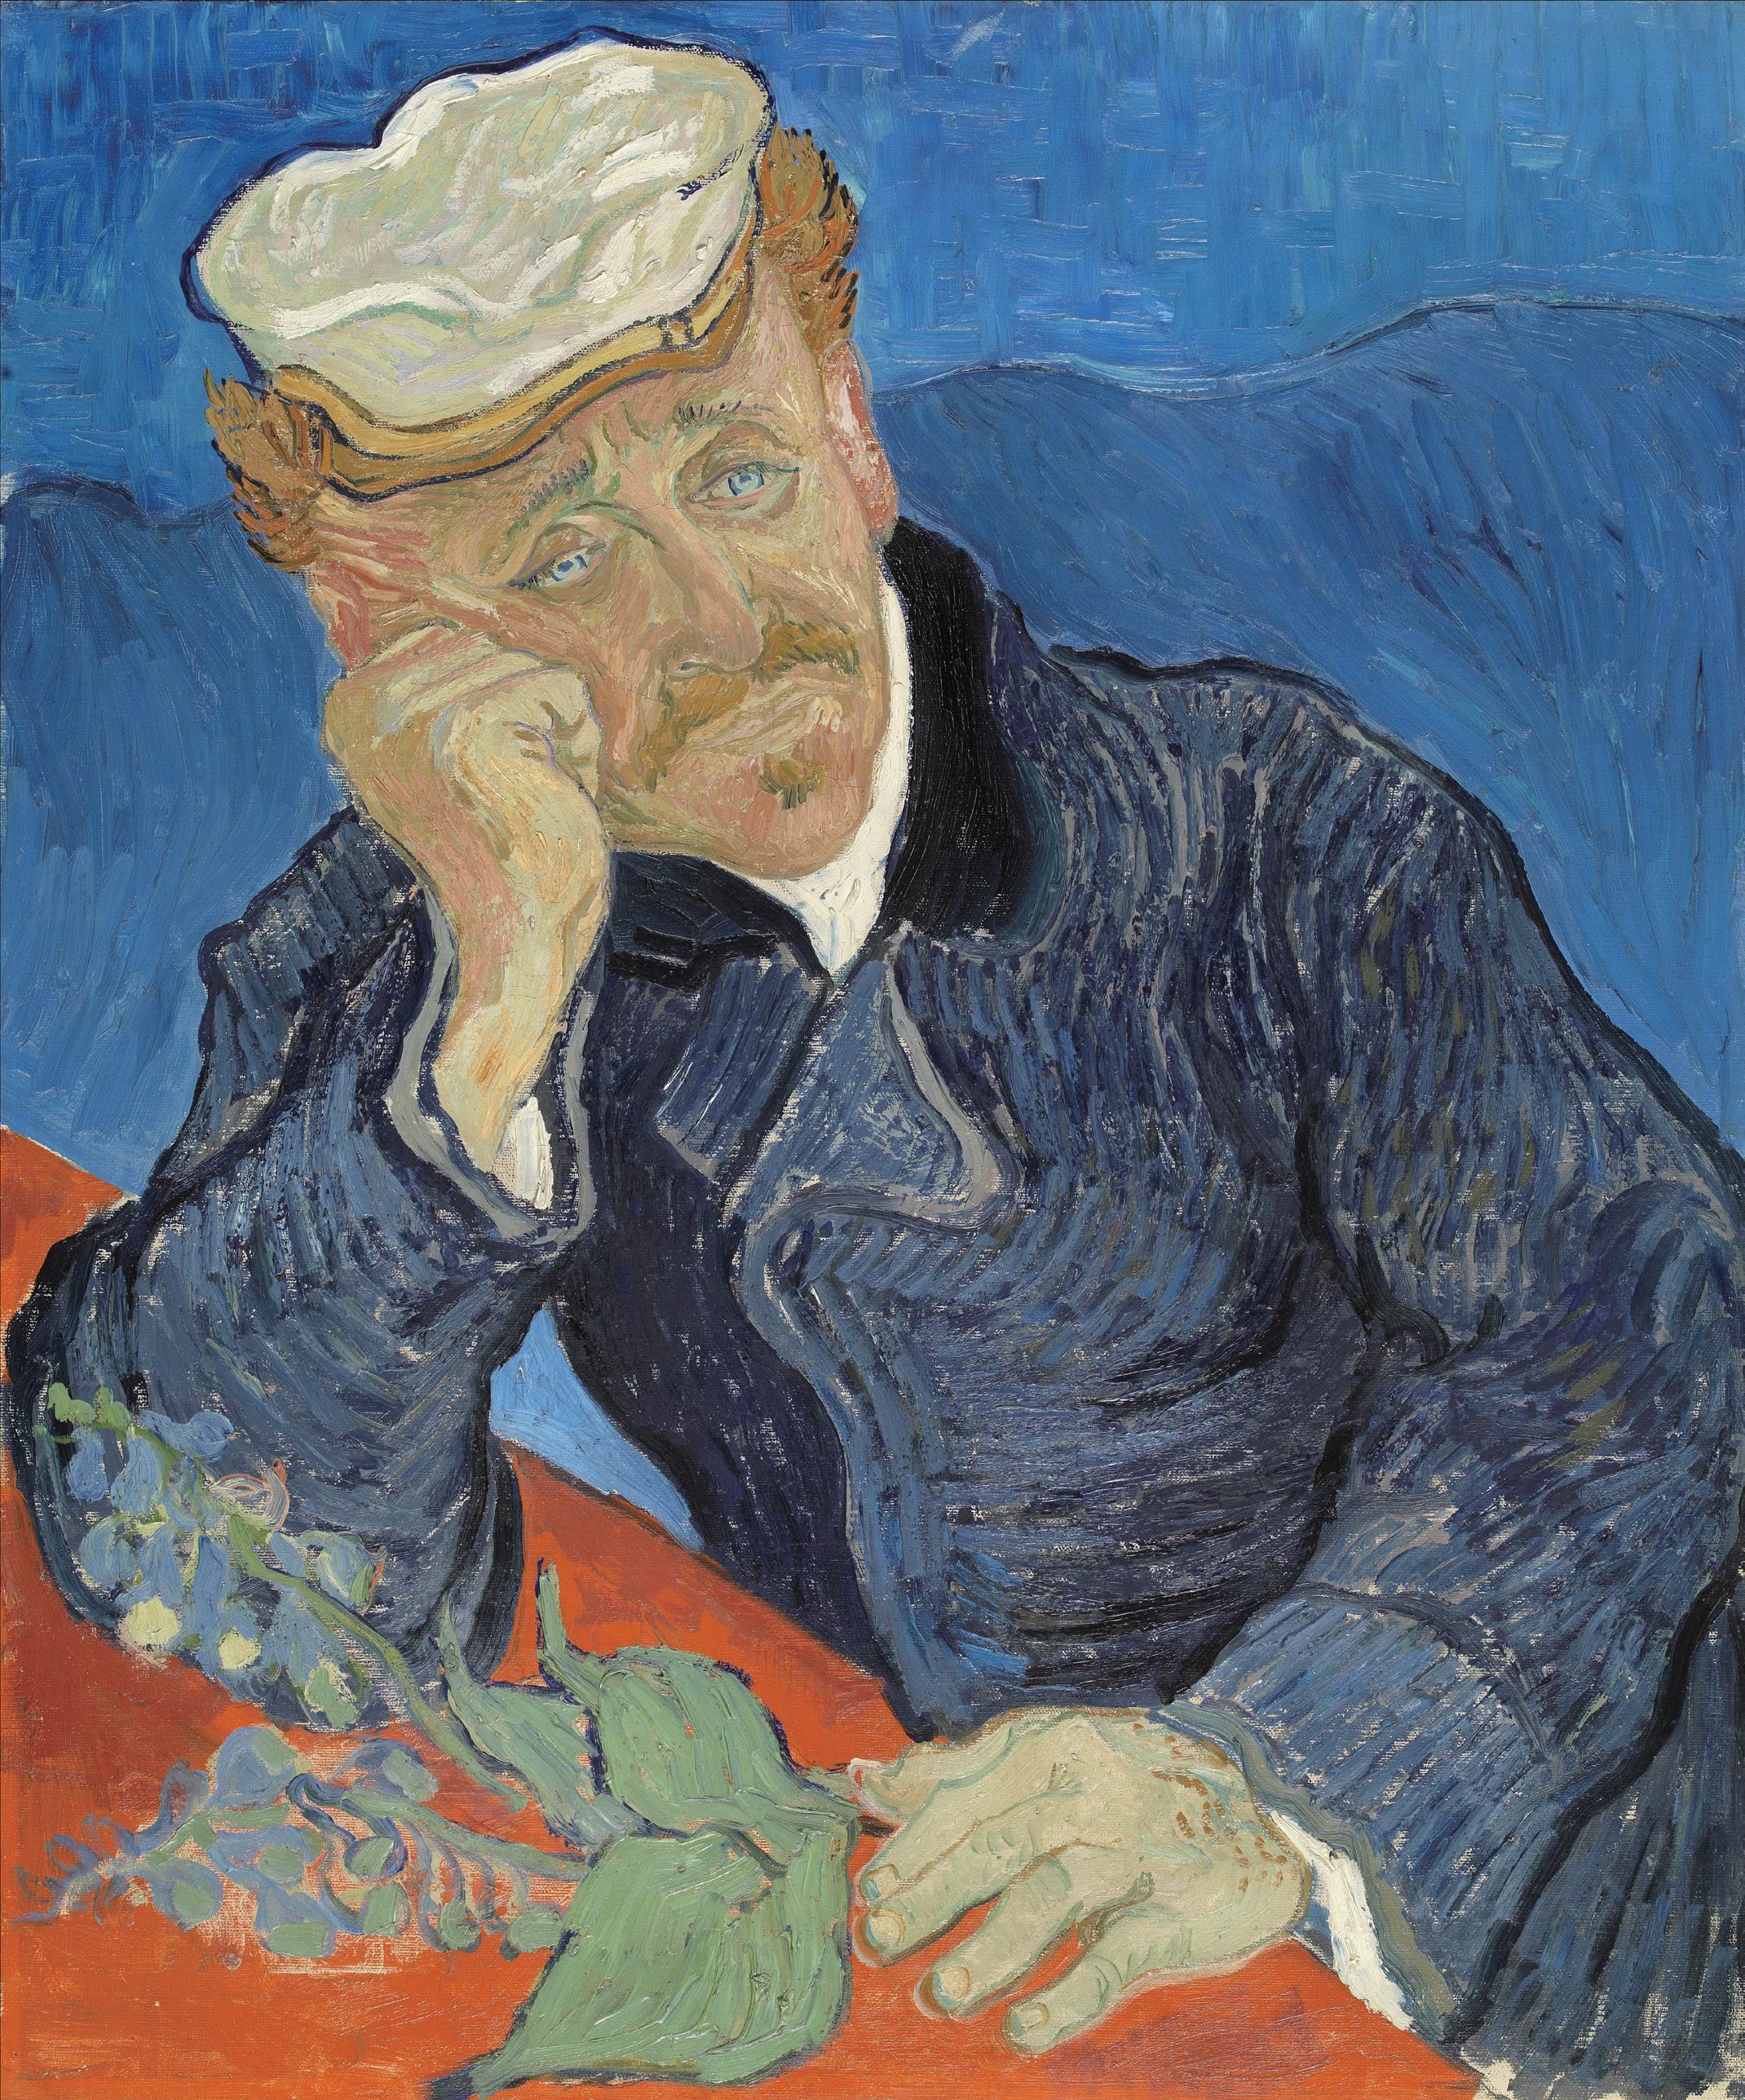 General 2140x2575 oil painting Oil on canvas Vincent van Gogh artwork men hand on face portrait display frown moustache classic art